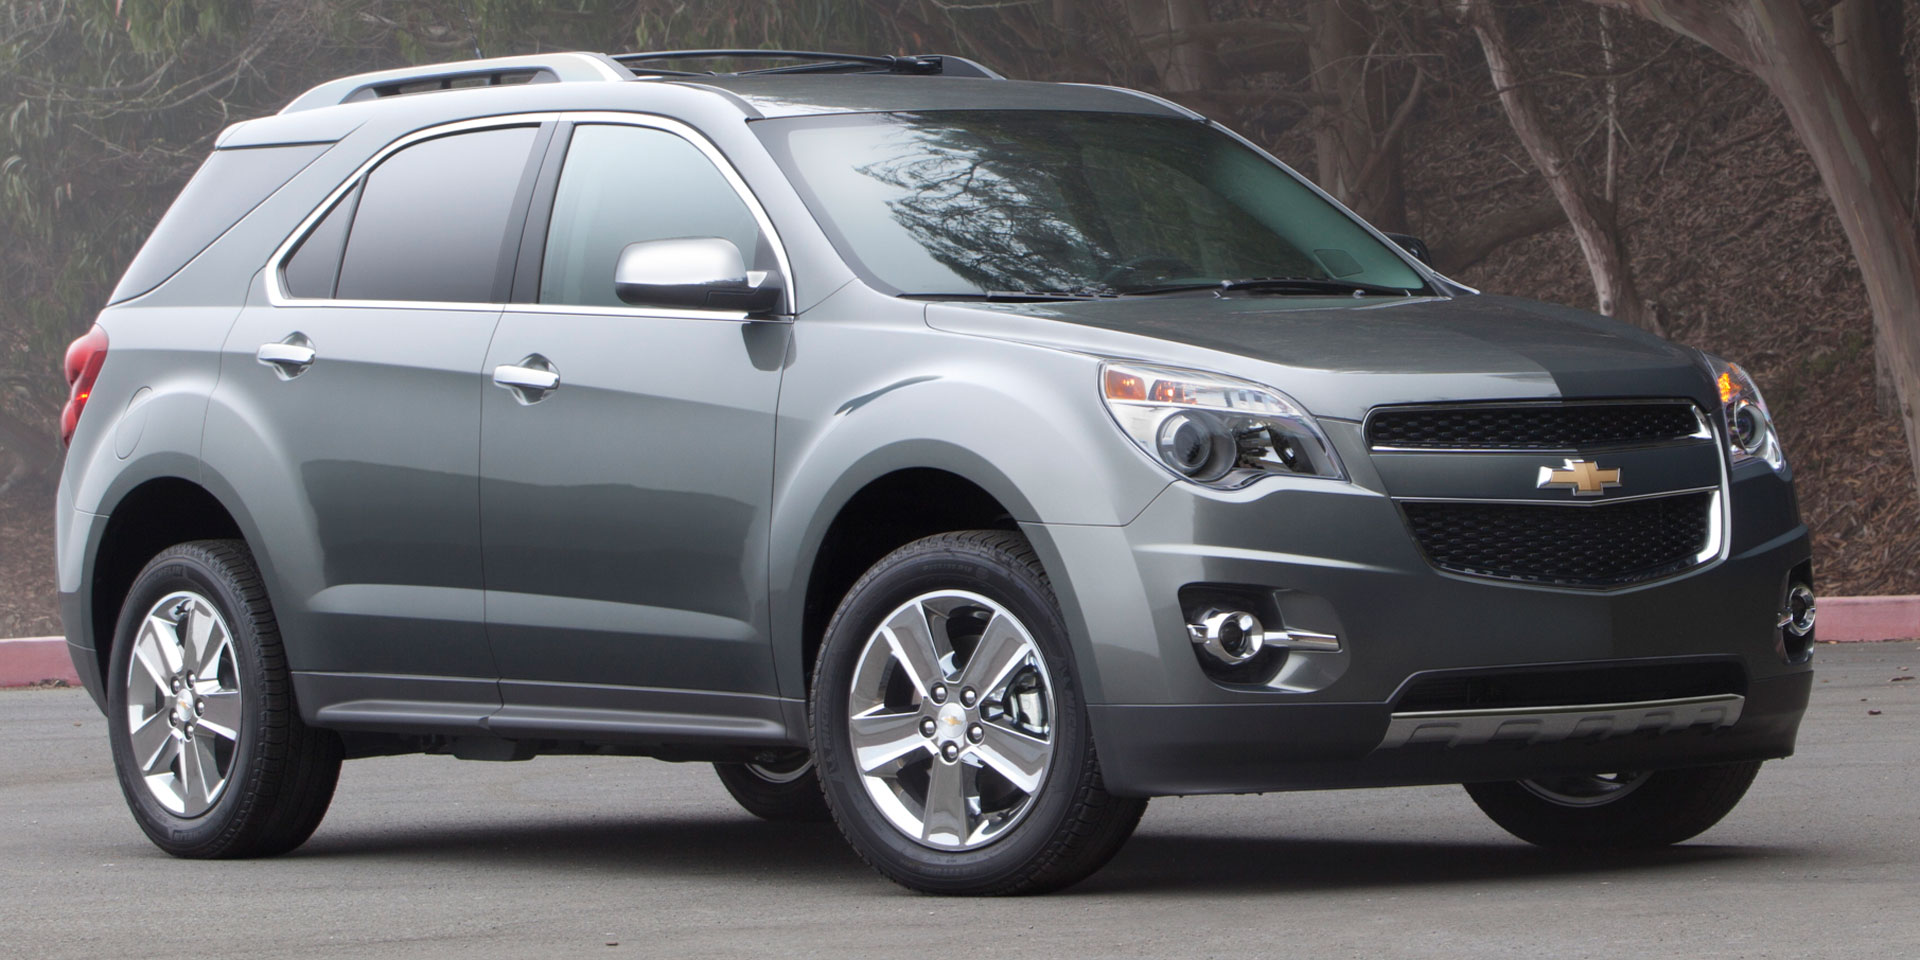 2015 - Chevrolet - Equinox - Vehicles on Display | Chicago Auto Show